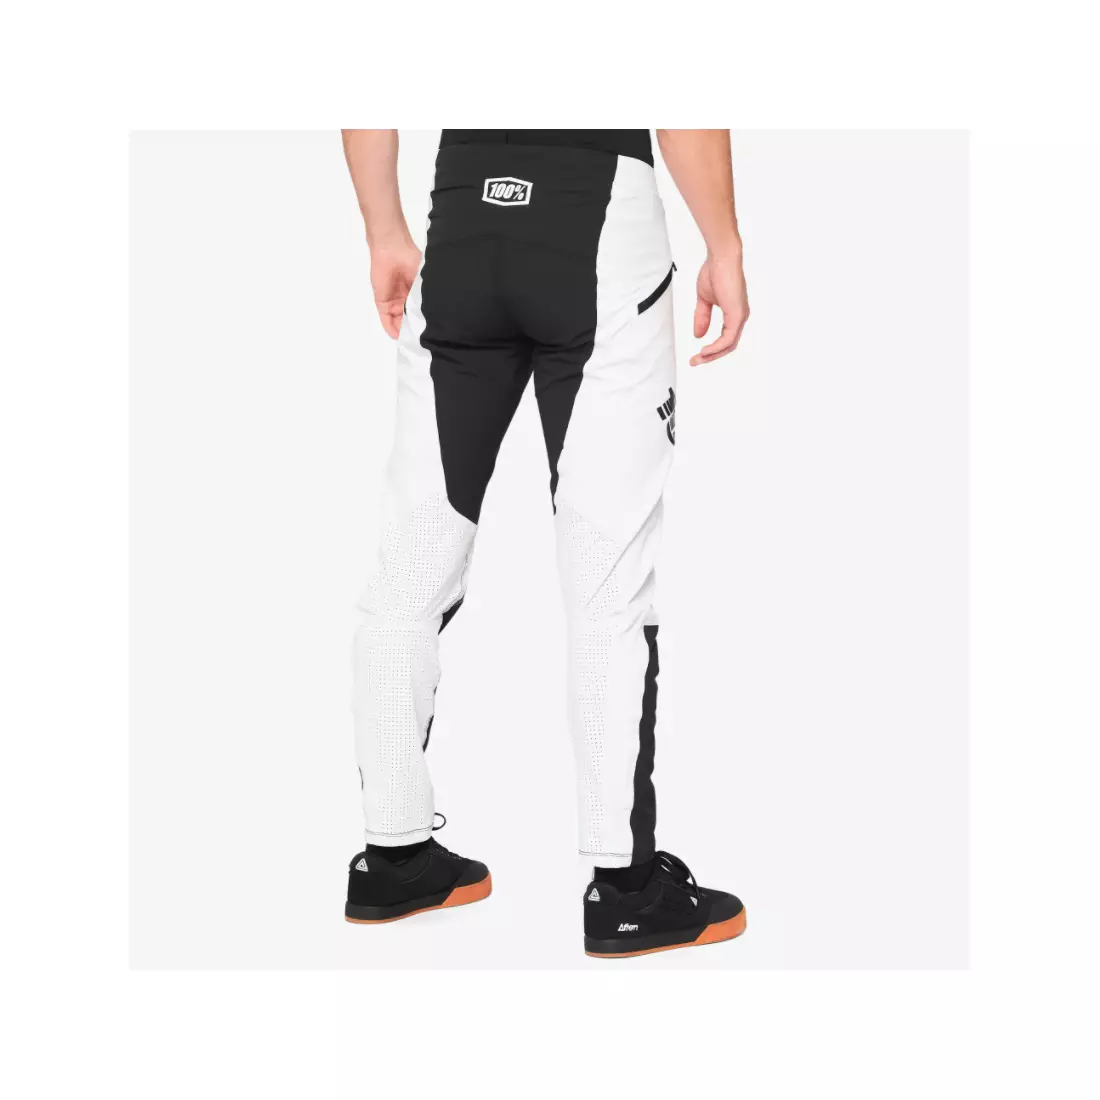 100% pánské cyklistické kalhoty R-CORE X Černý a bílý